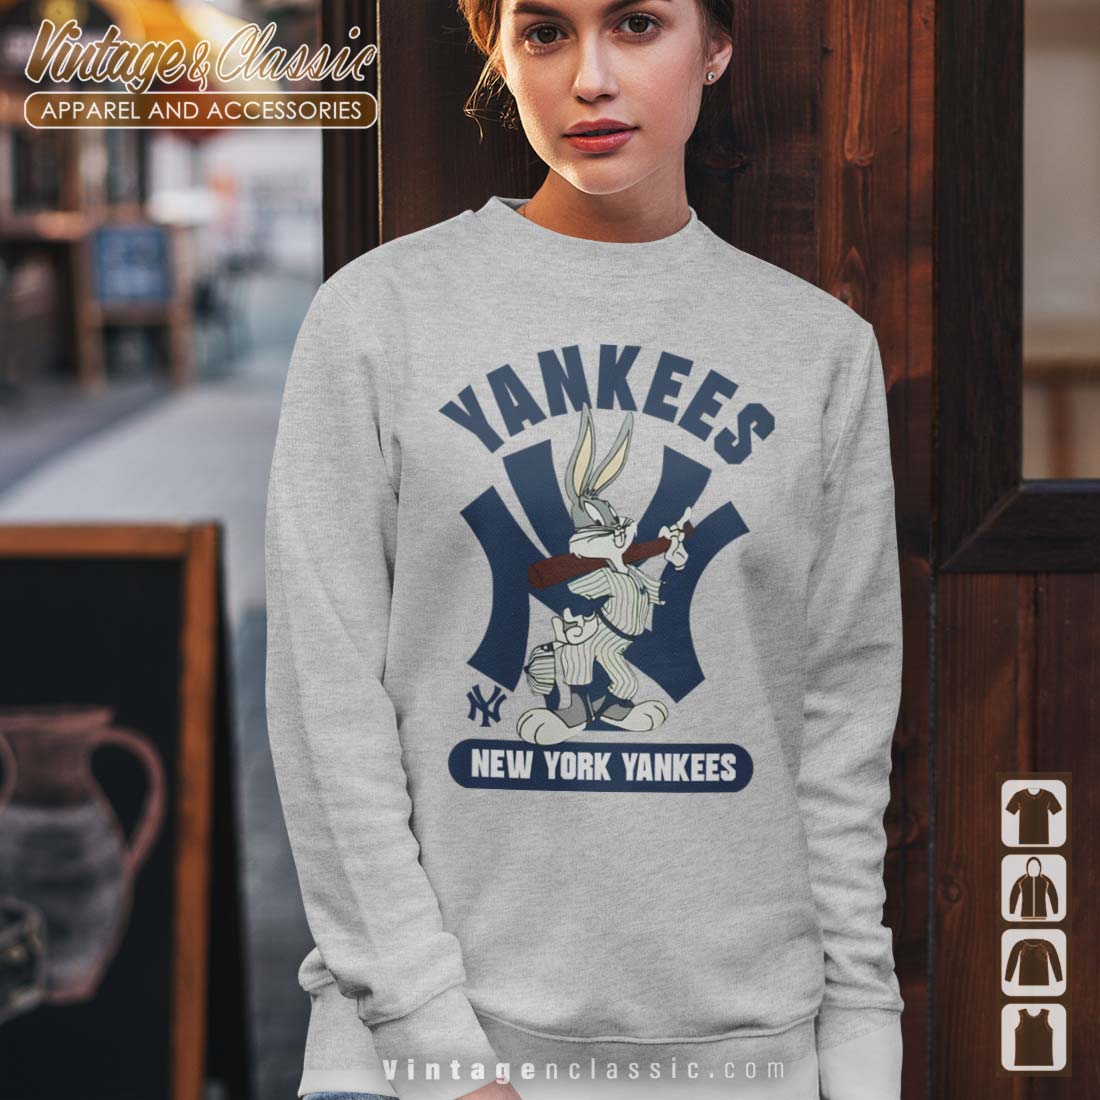 Vintage 90s New York Yankees Crewneck